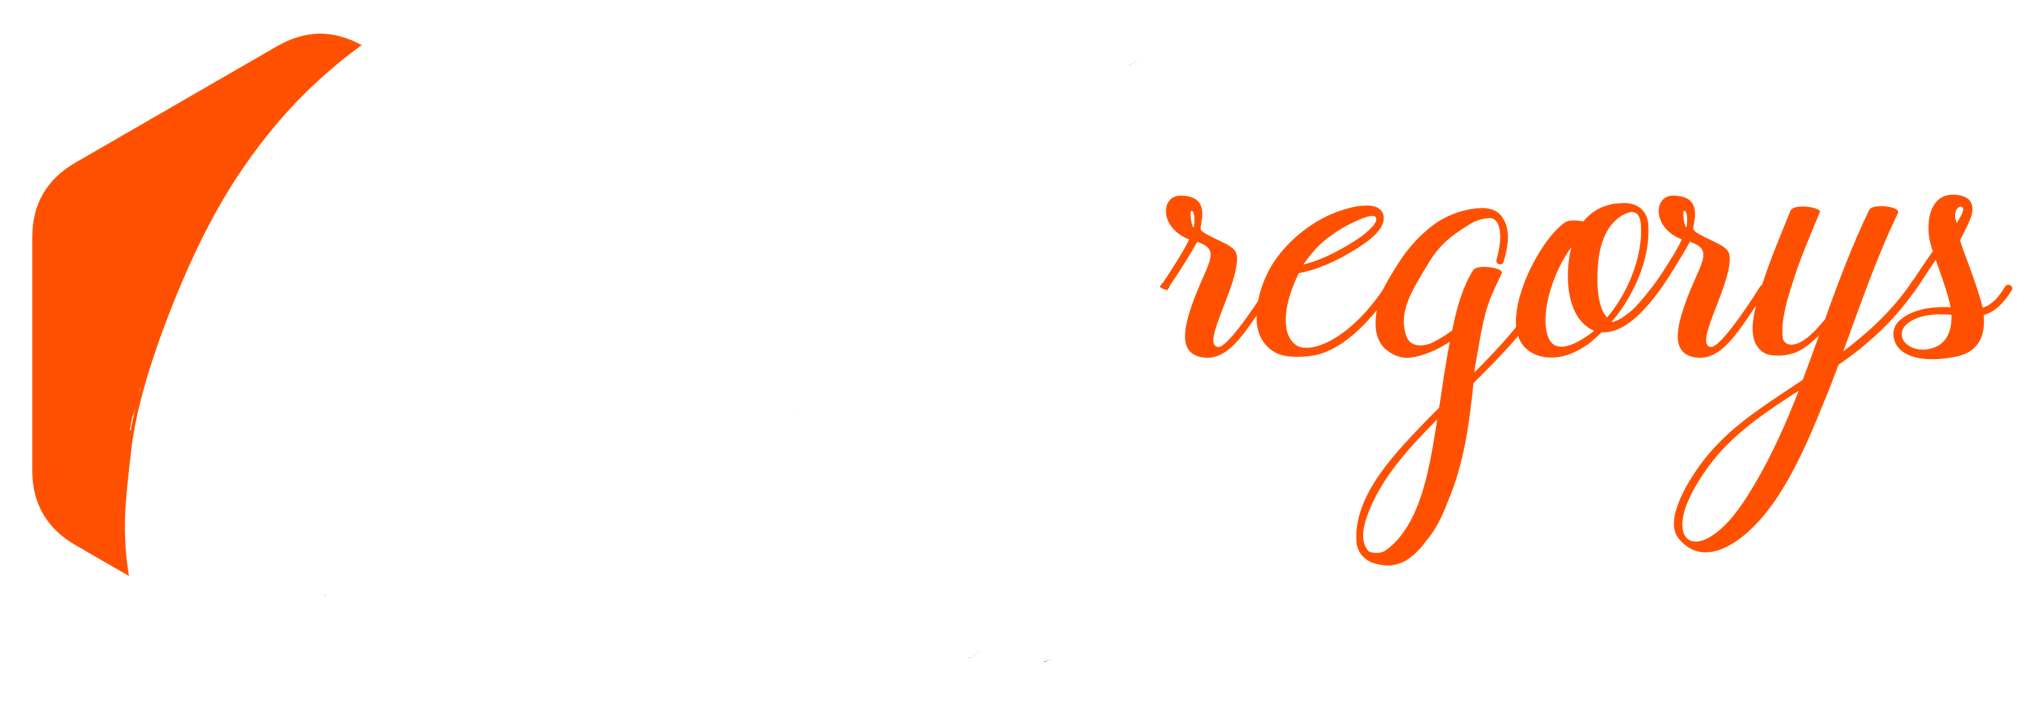 Gregory Store(Pvt)Ltd